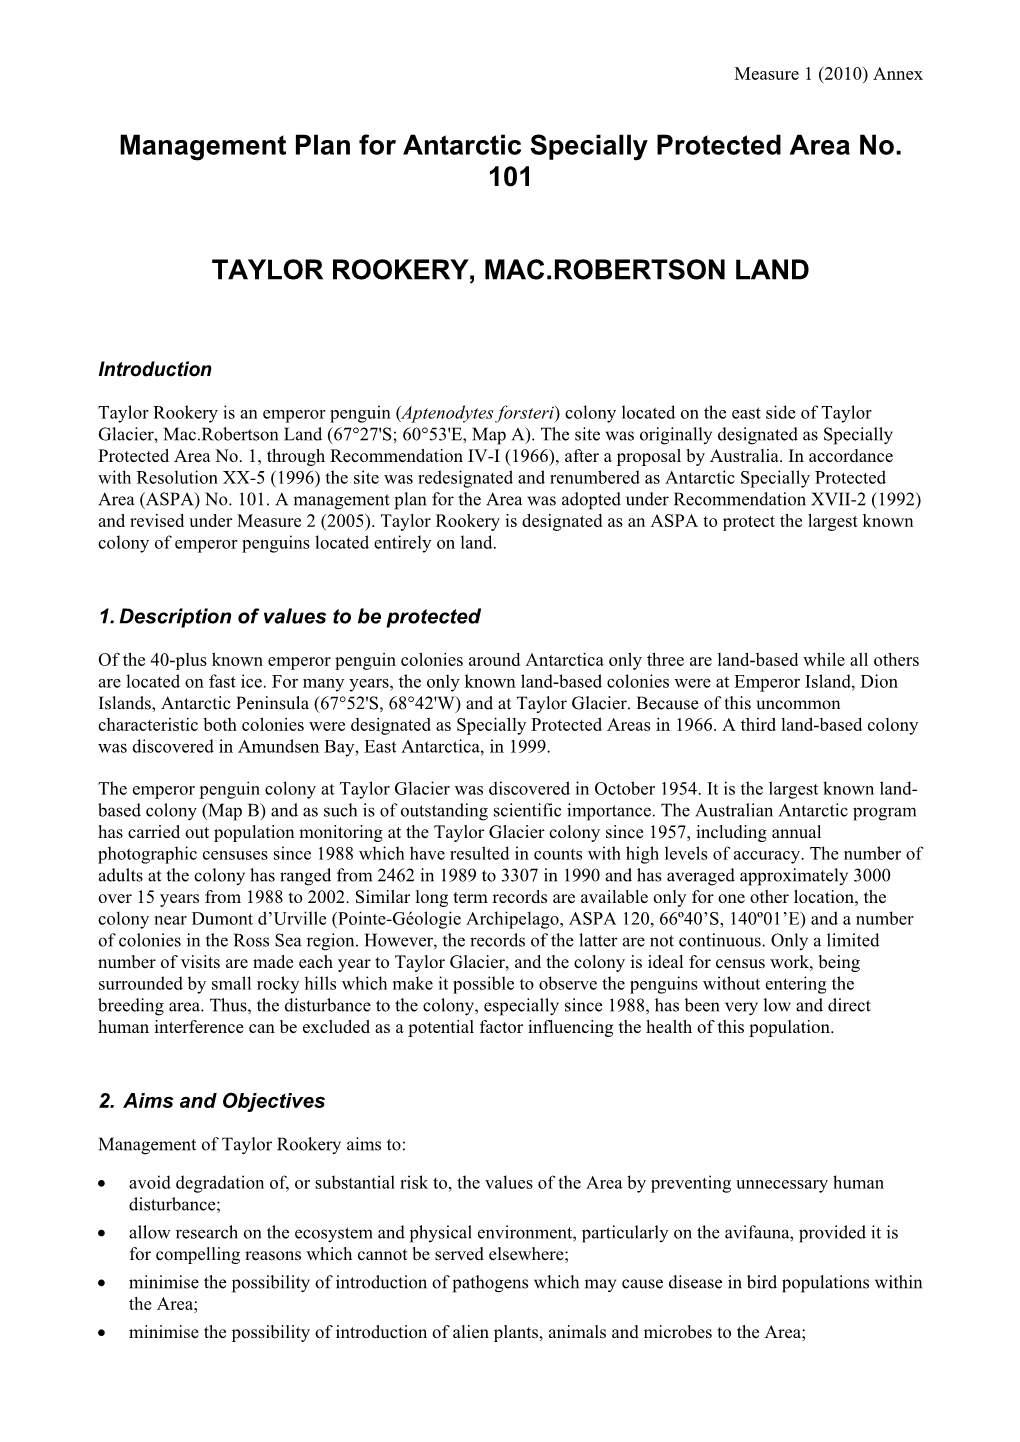 Taylor Rookery, Mac. Robertson